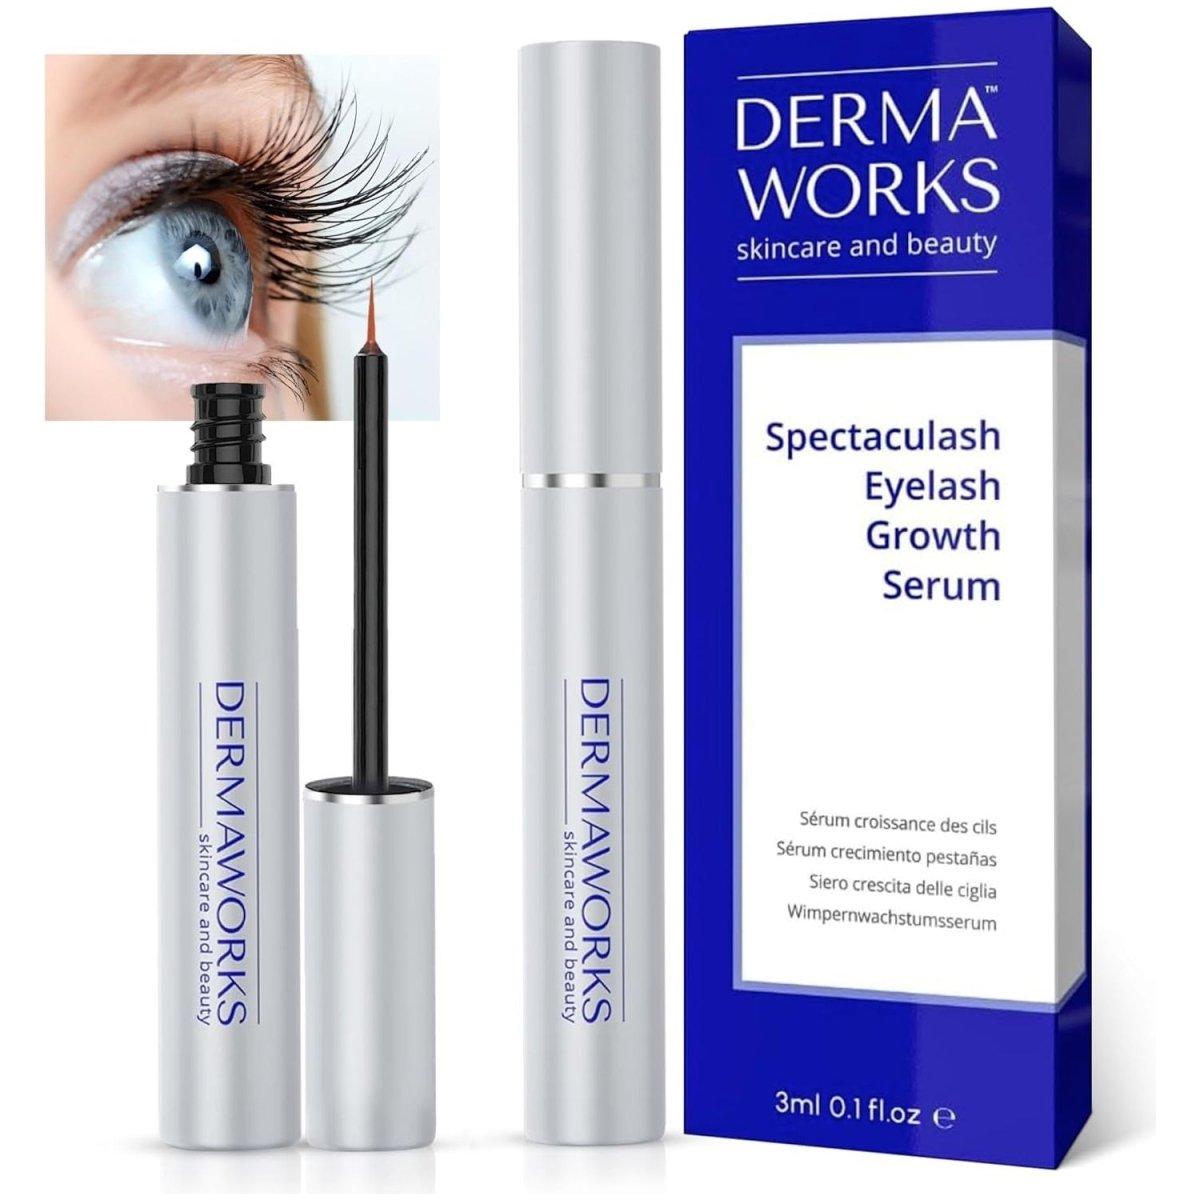 Dermaworks Spectaculash Advanced Eyelash Growth Serum - 3ml - AS SEEN IN VOGUE - DG International Ventures Limited